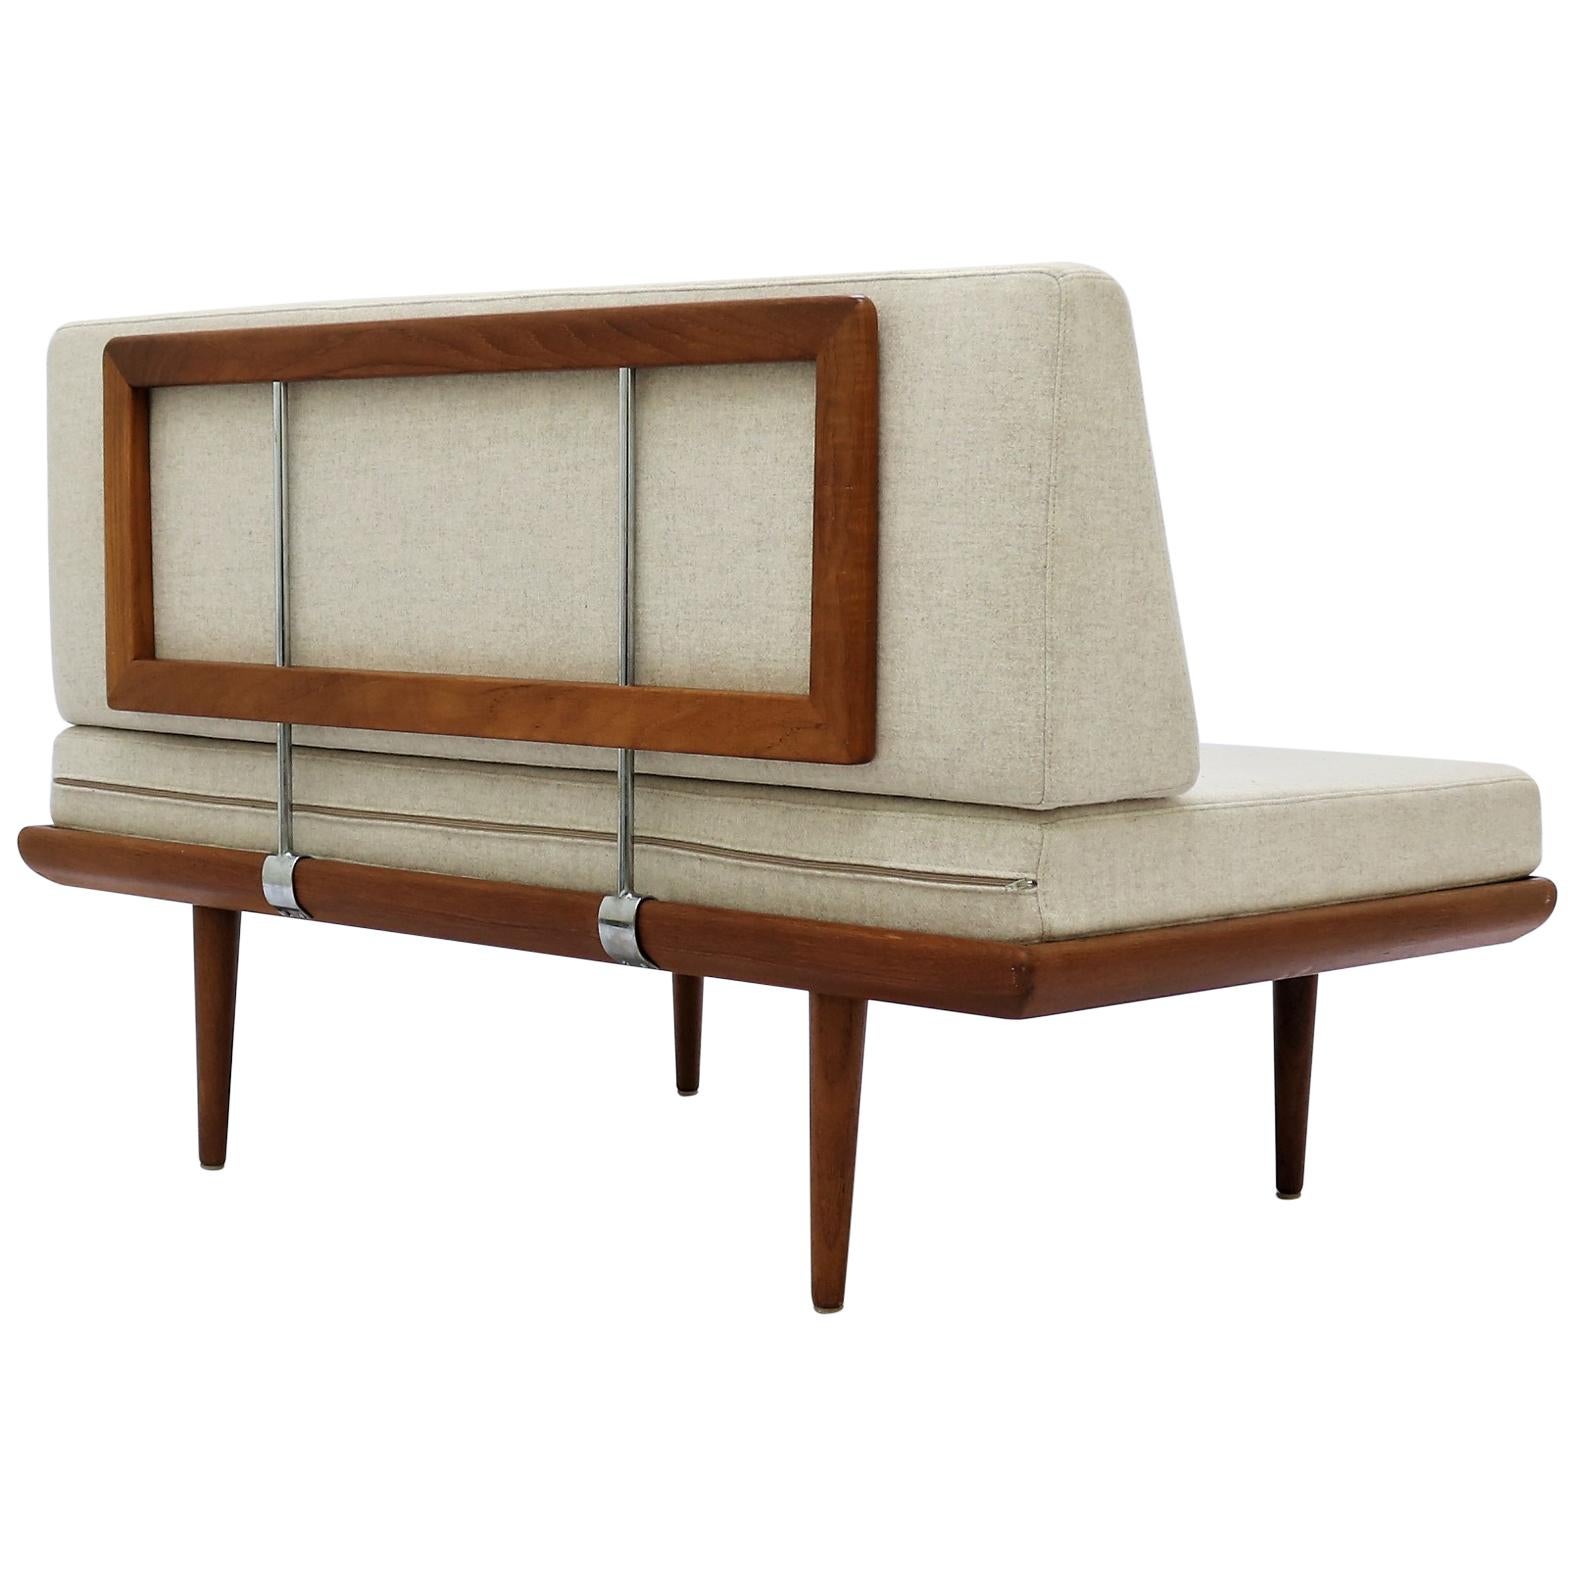 Hvidt & Molgaard Teakwood Two-Seat Sofa Model "Minerva" for France & Son, 1960